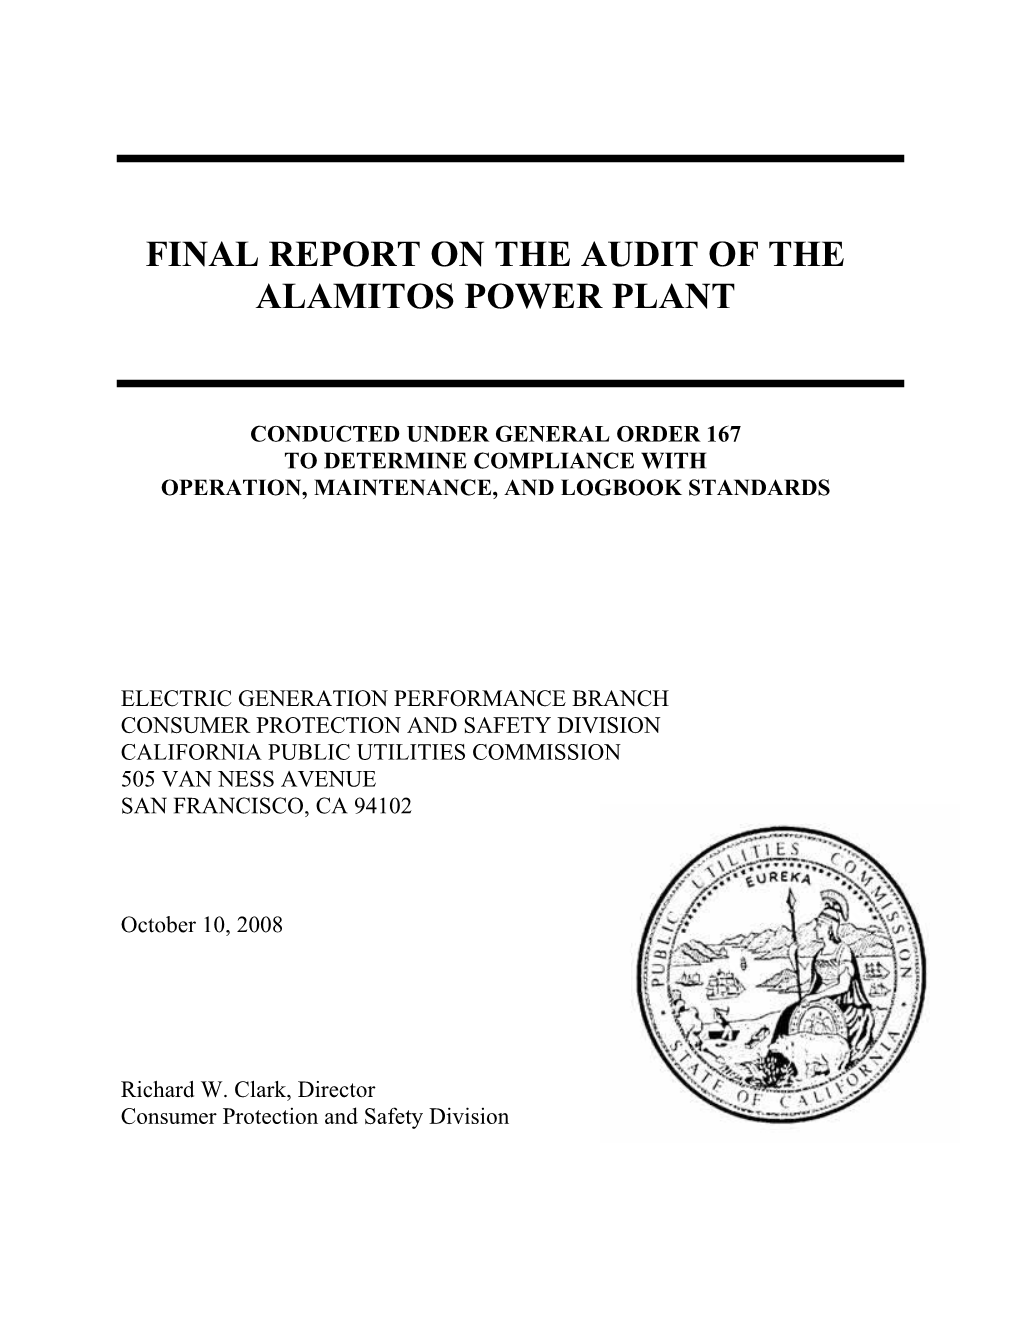 Alamitos Generation Station Audit Report